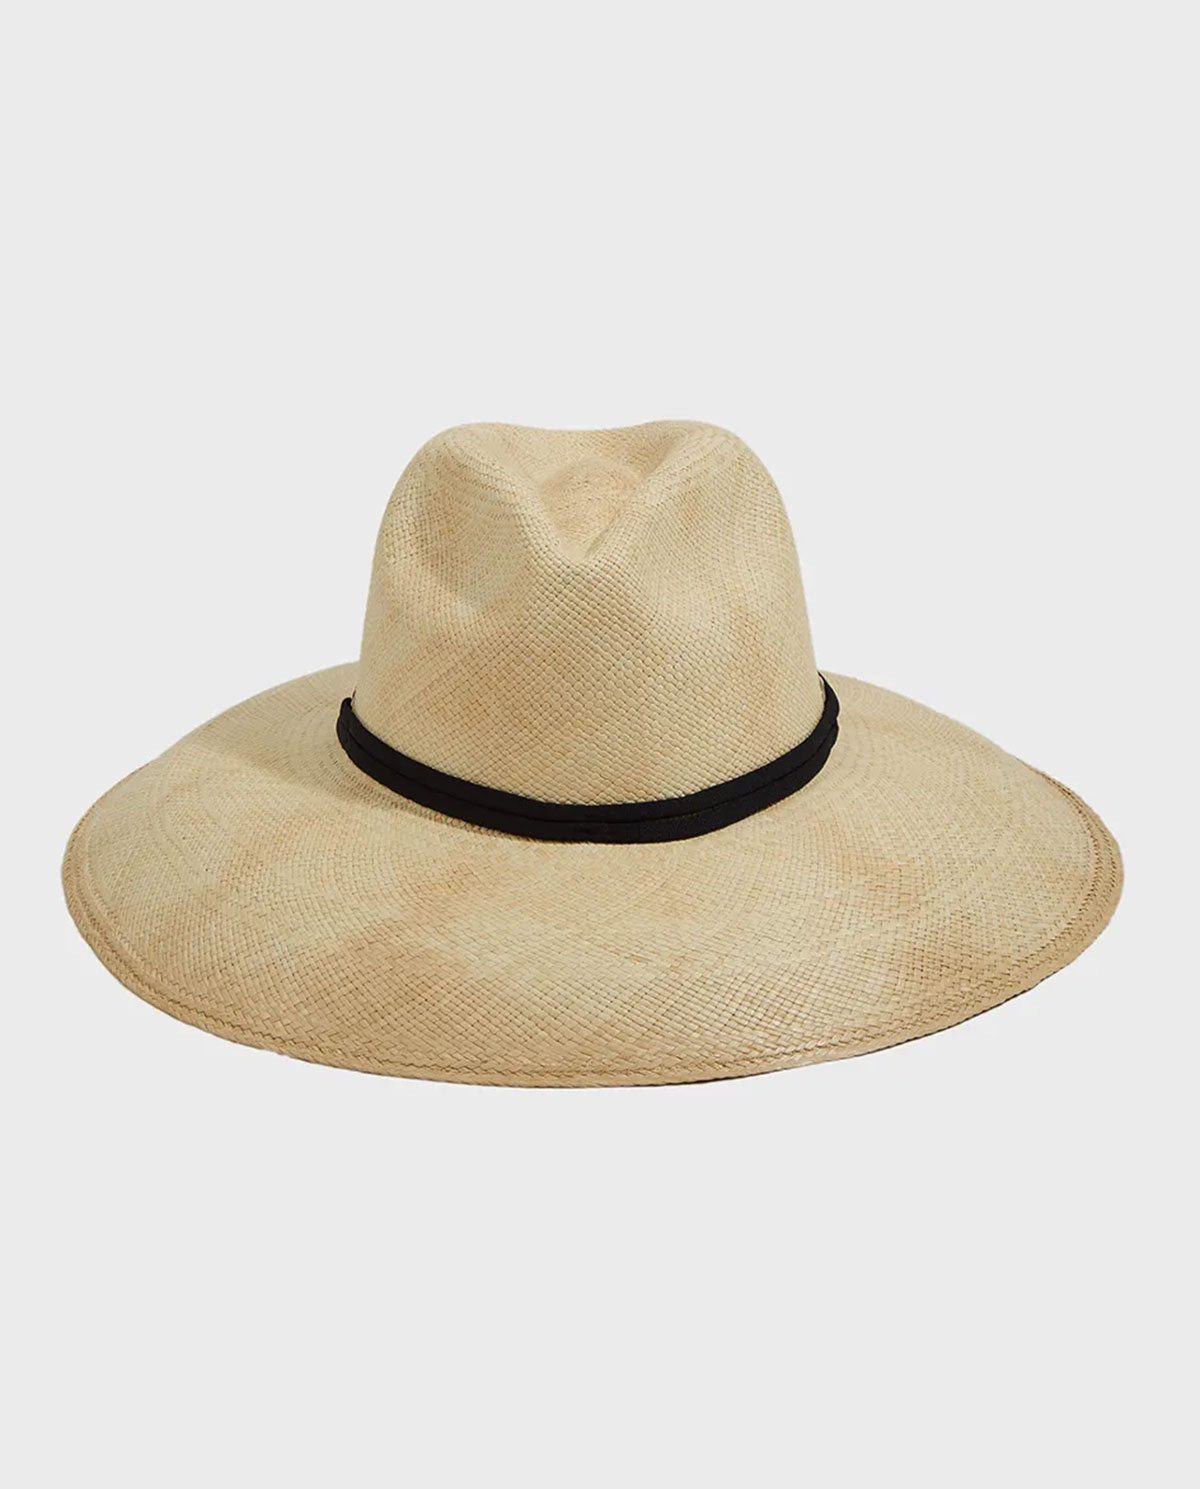 SENSI STUDIO - Beżowy kapelusz Panama 2370.BE-NA/BK/CO